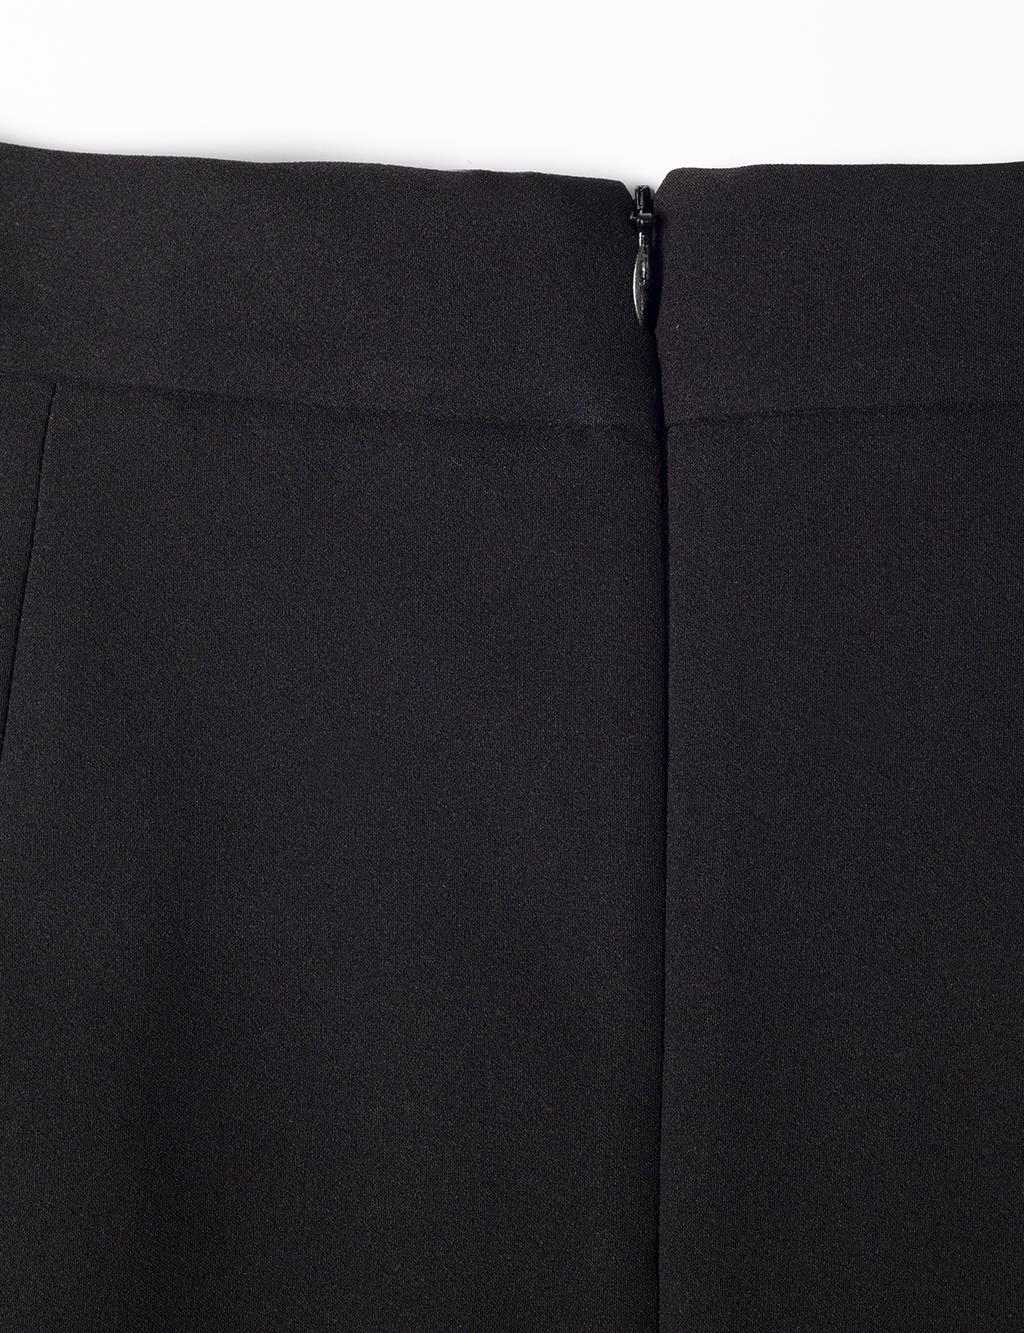 Zipper and Pleat Detailed Skirt Black